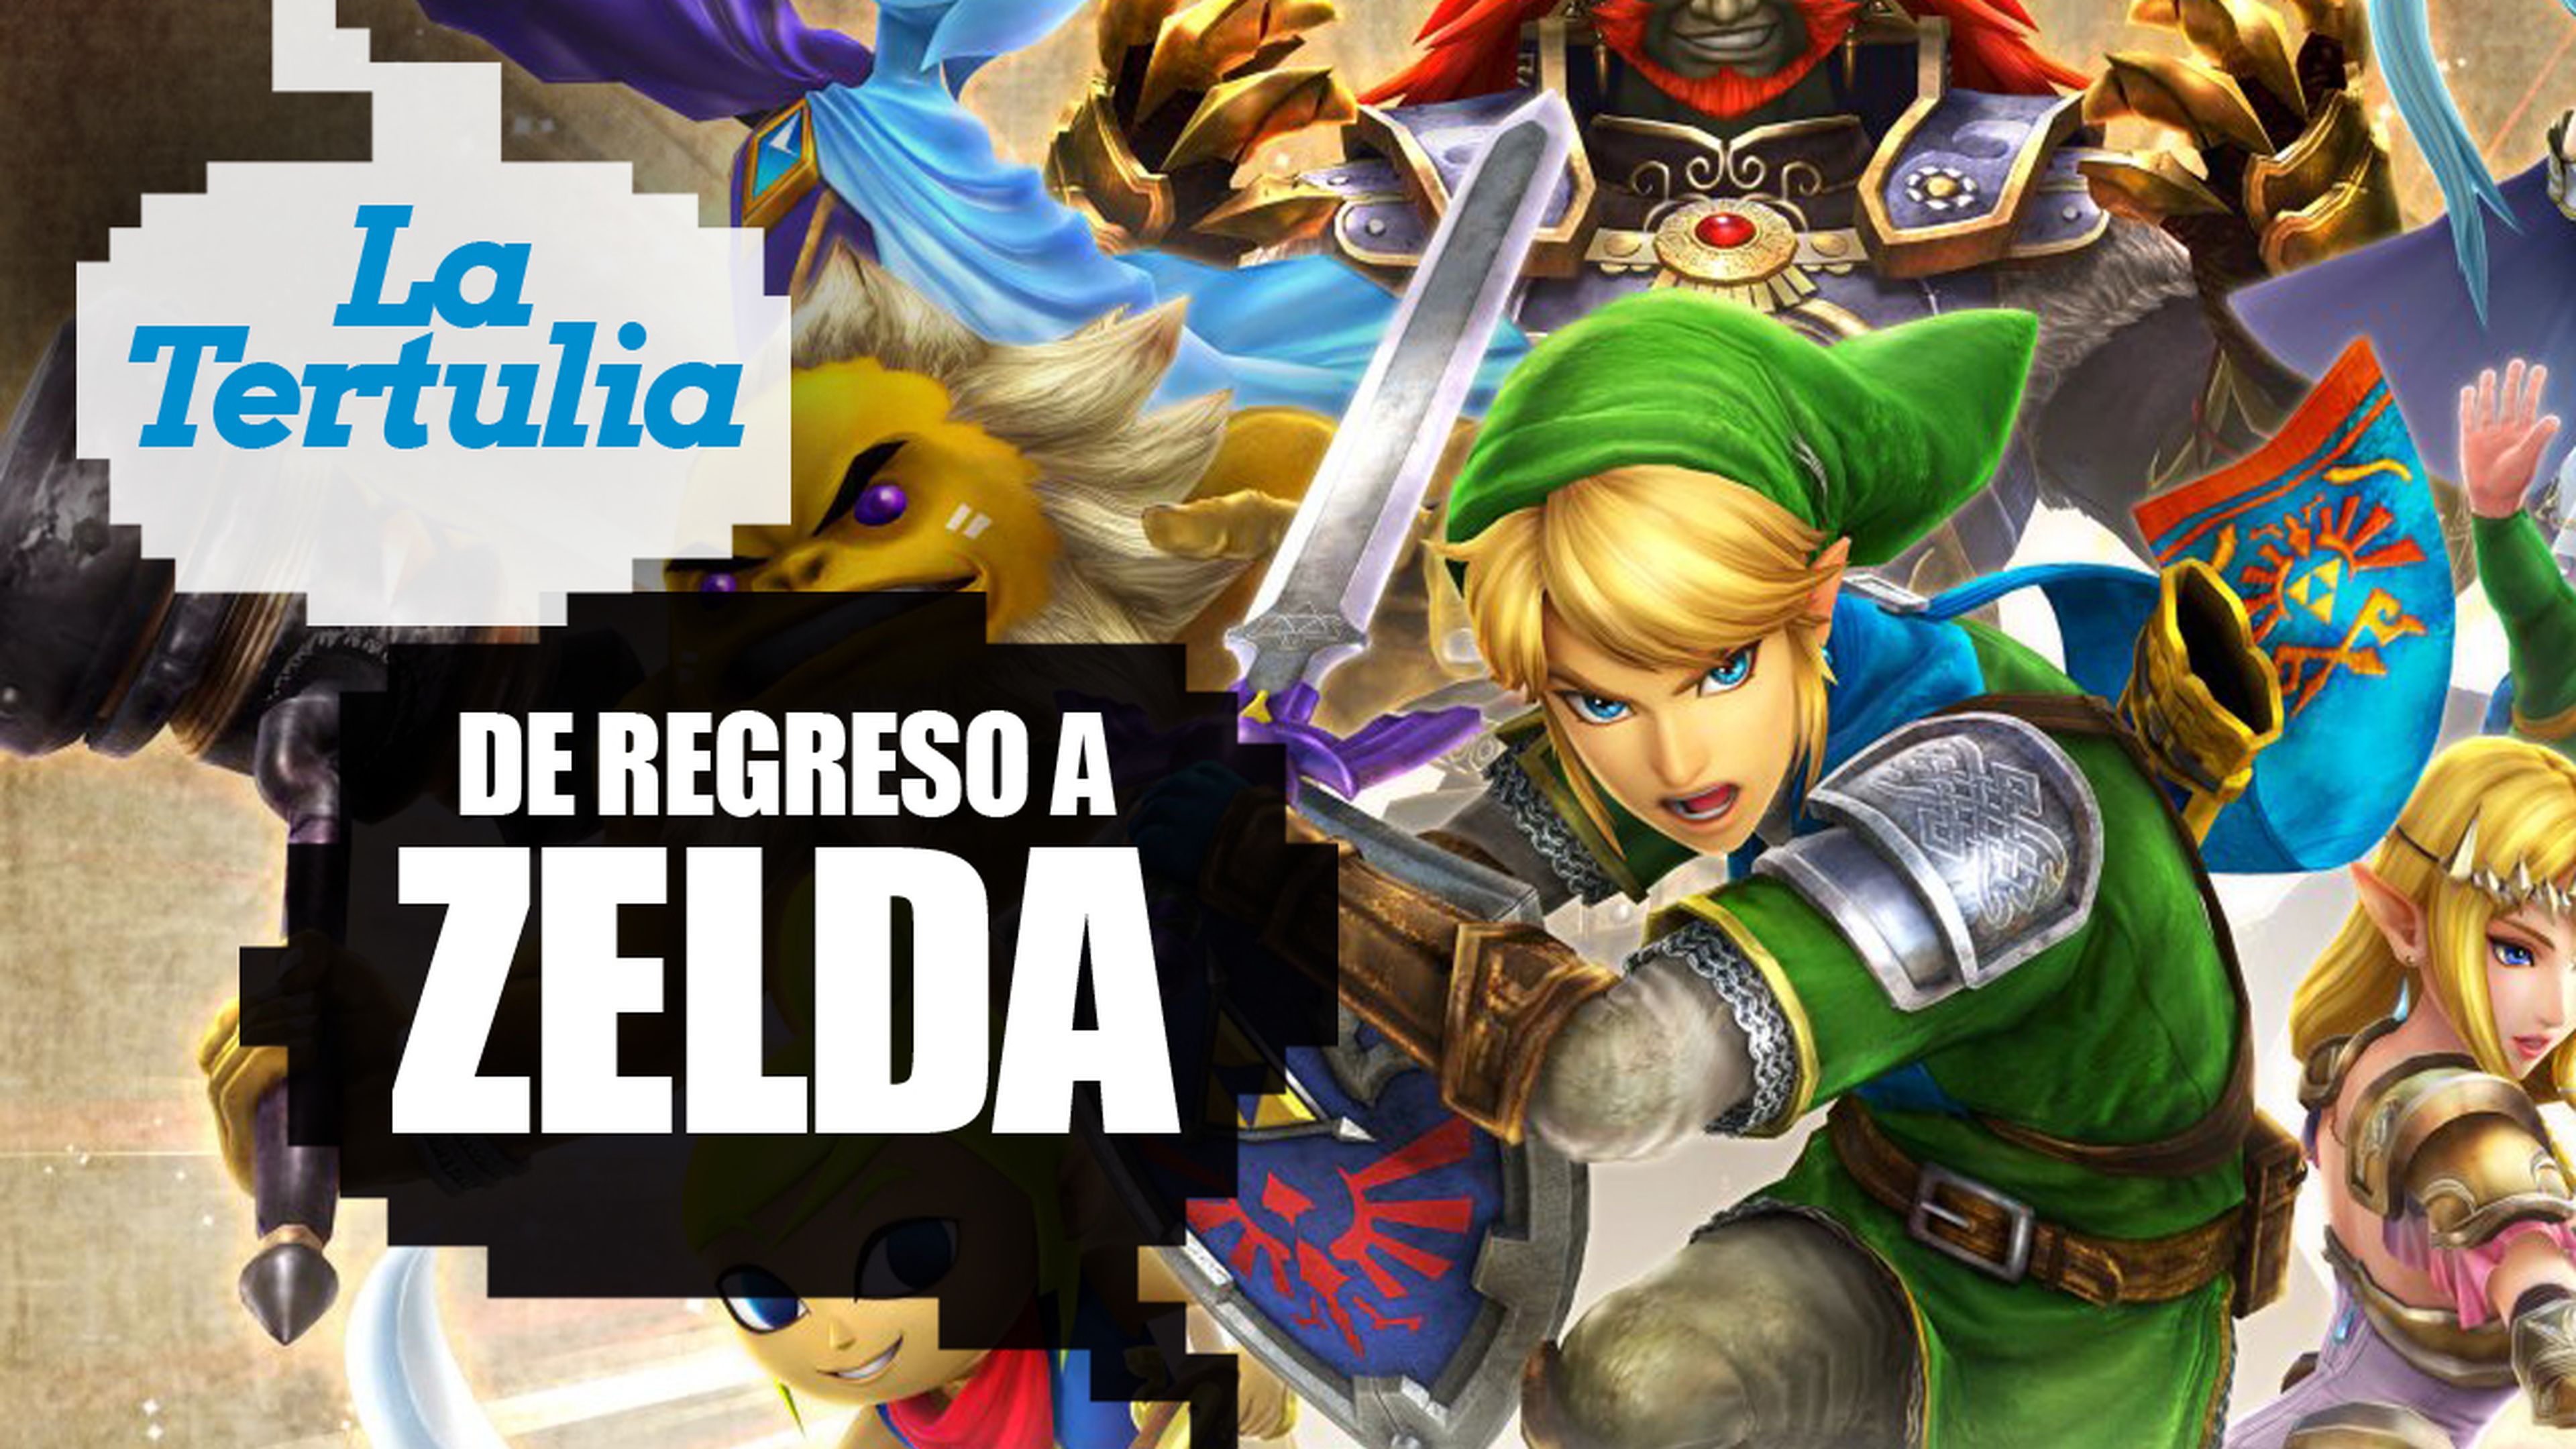 La tertulia de regreso a Zelda